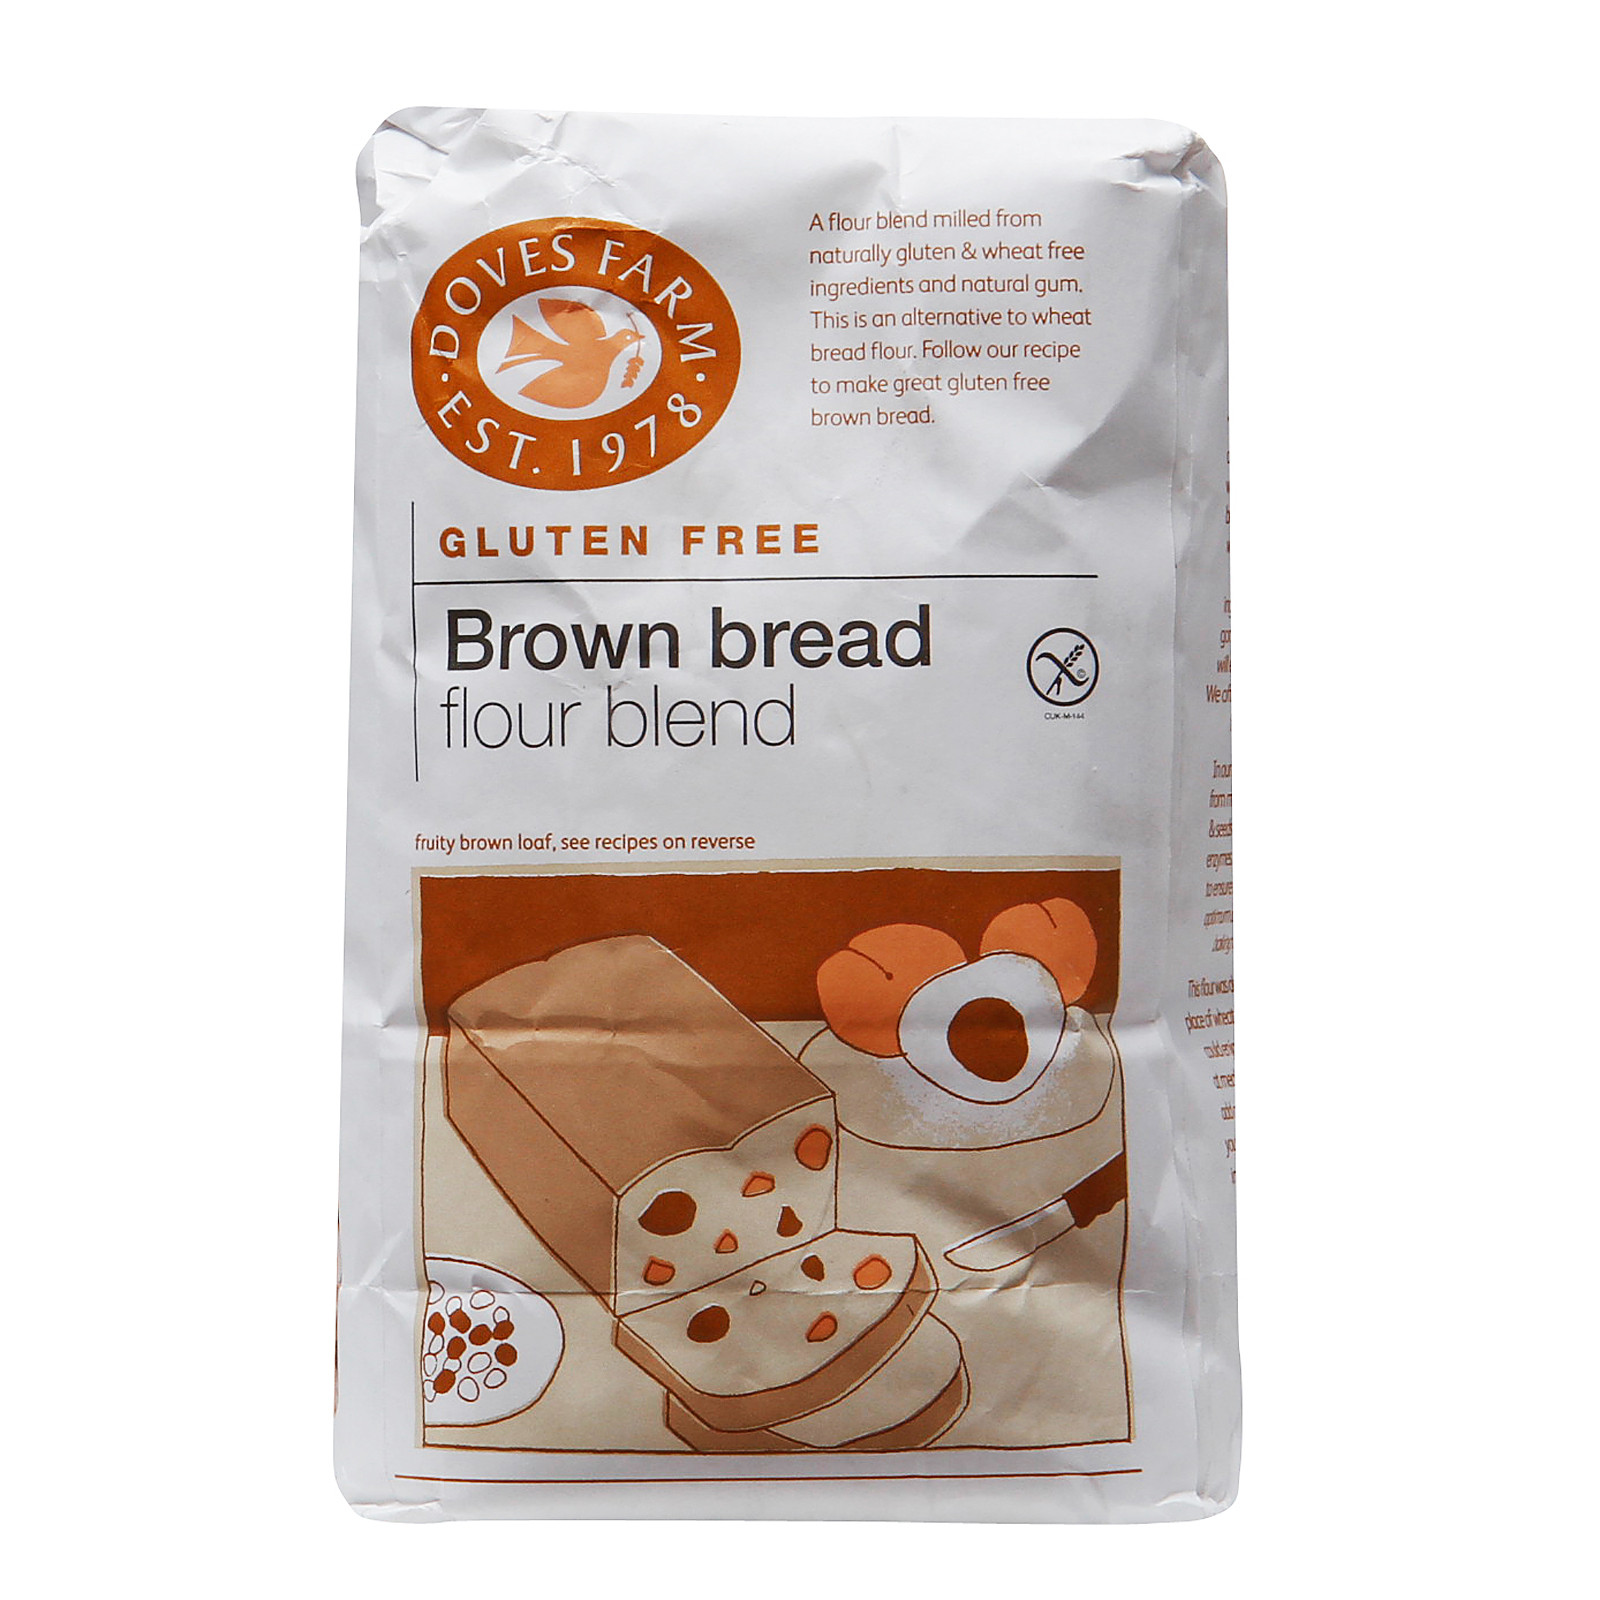 Gluten Free Bread Flour Blend
 Doves Farm Gluten Free Brown Bread Flour Blend 1kg from